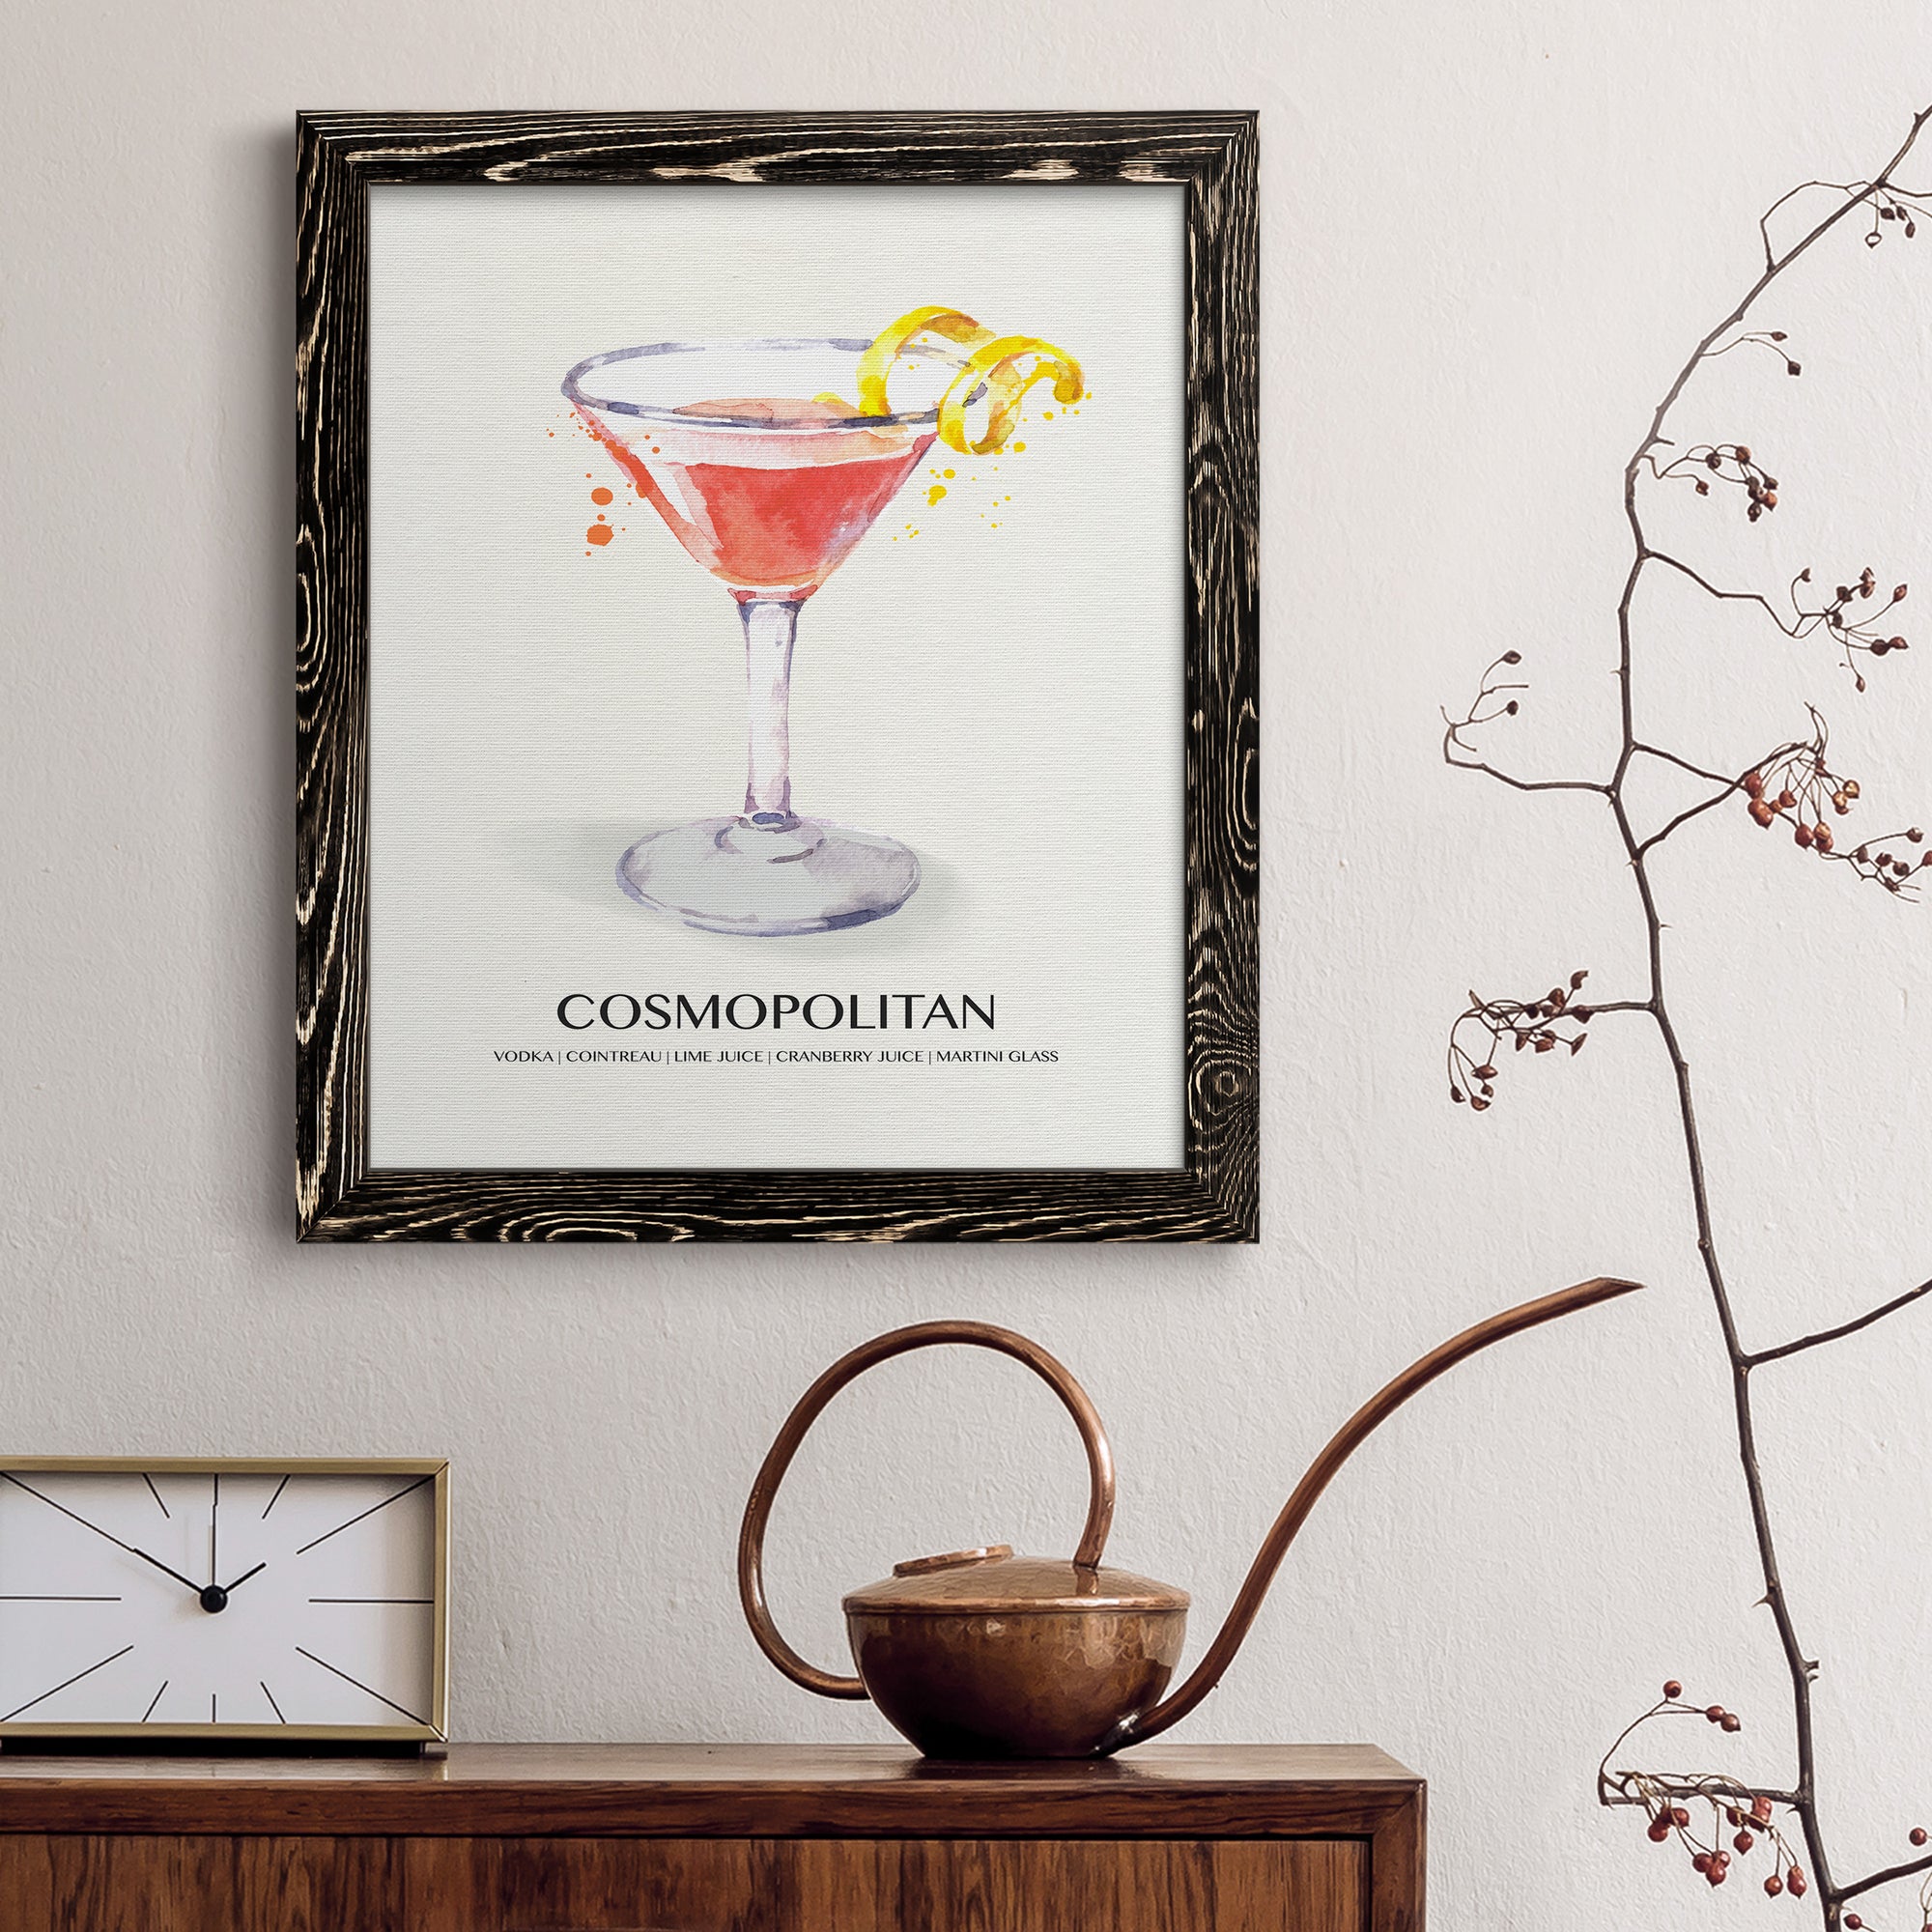 Cosmopolitan - Premium Canvas Framed in Barnwood - Ready to Hang